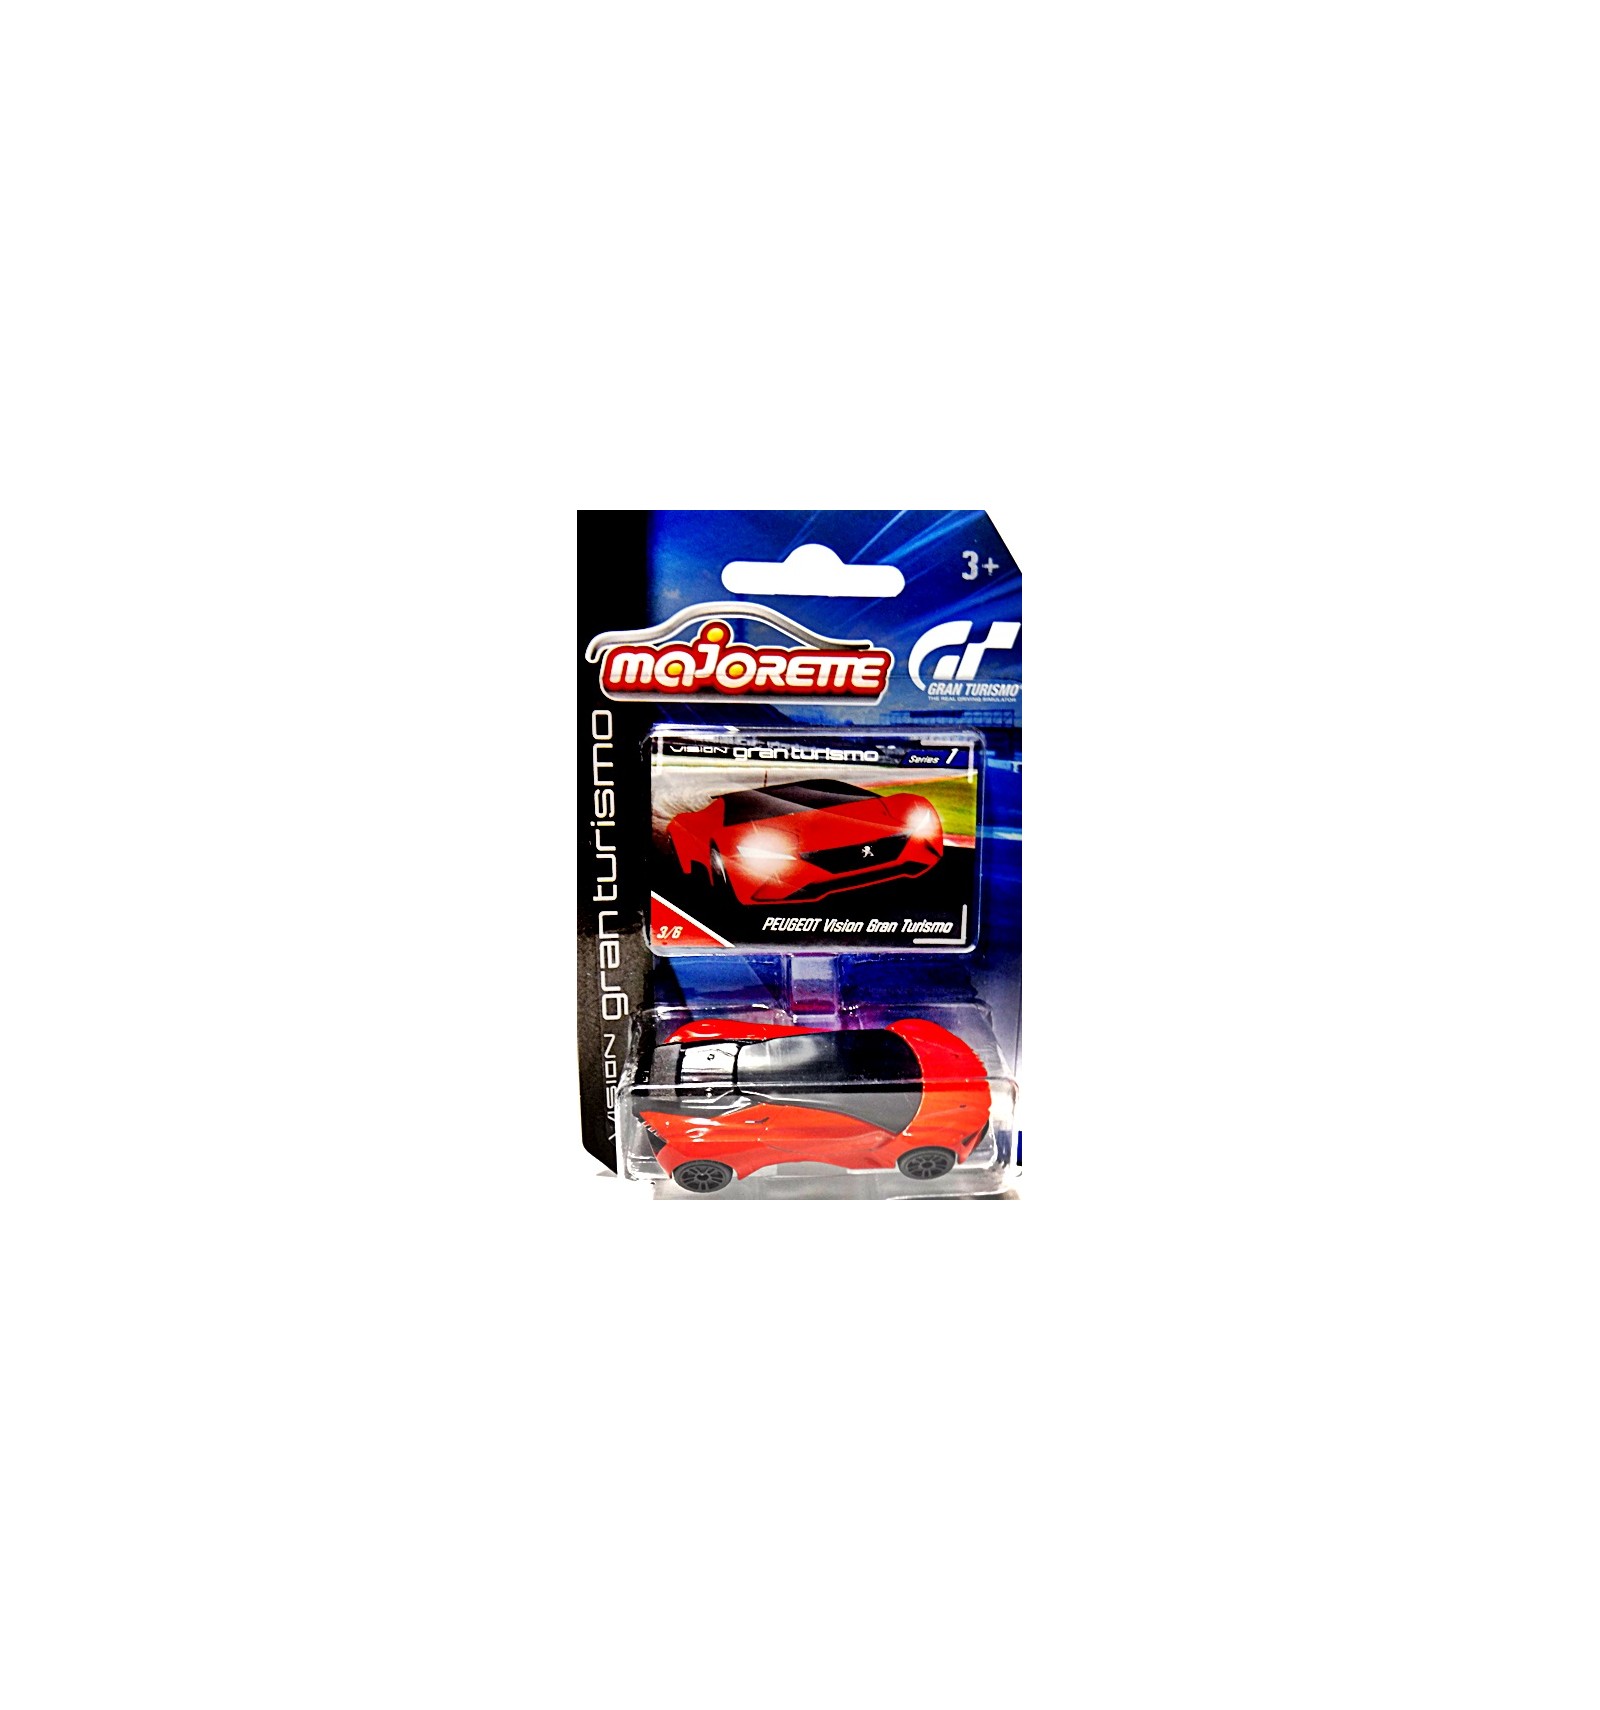 Majorette Gran Turismo - Peugeot Vision - Global Diecast Direct